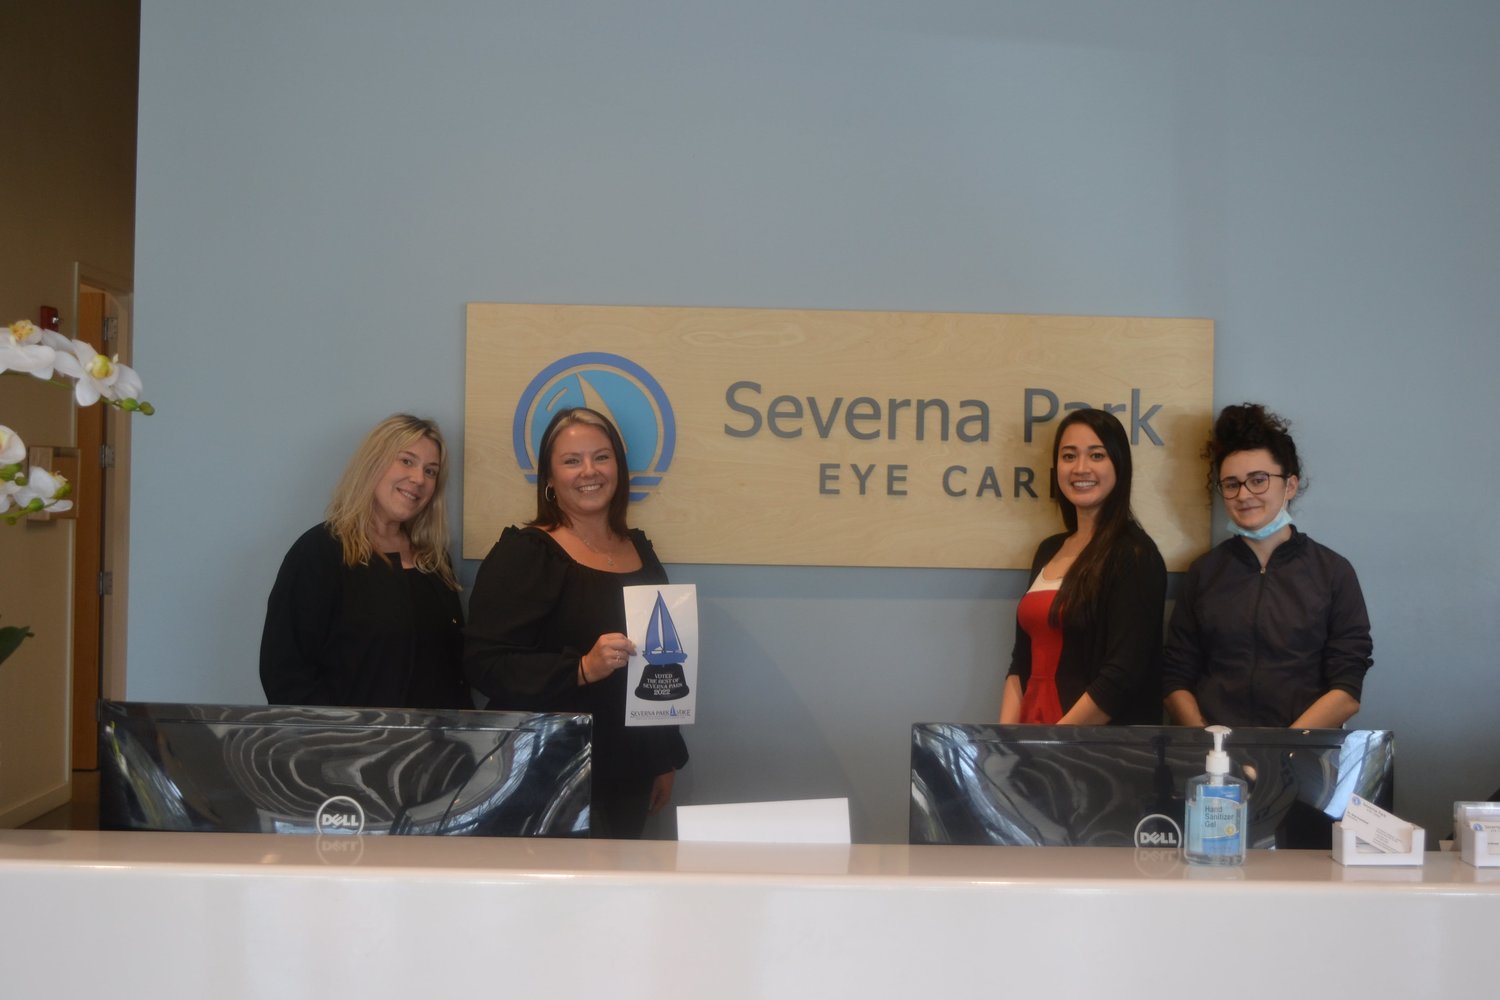 Best Eye Care Practice went to Severna Park Eye Care.